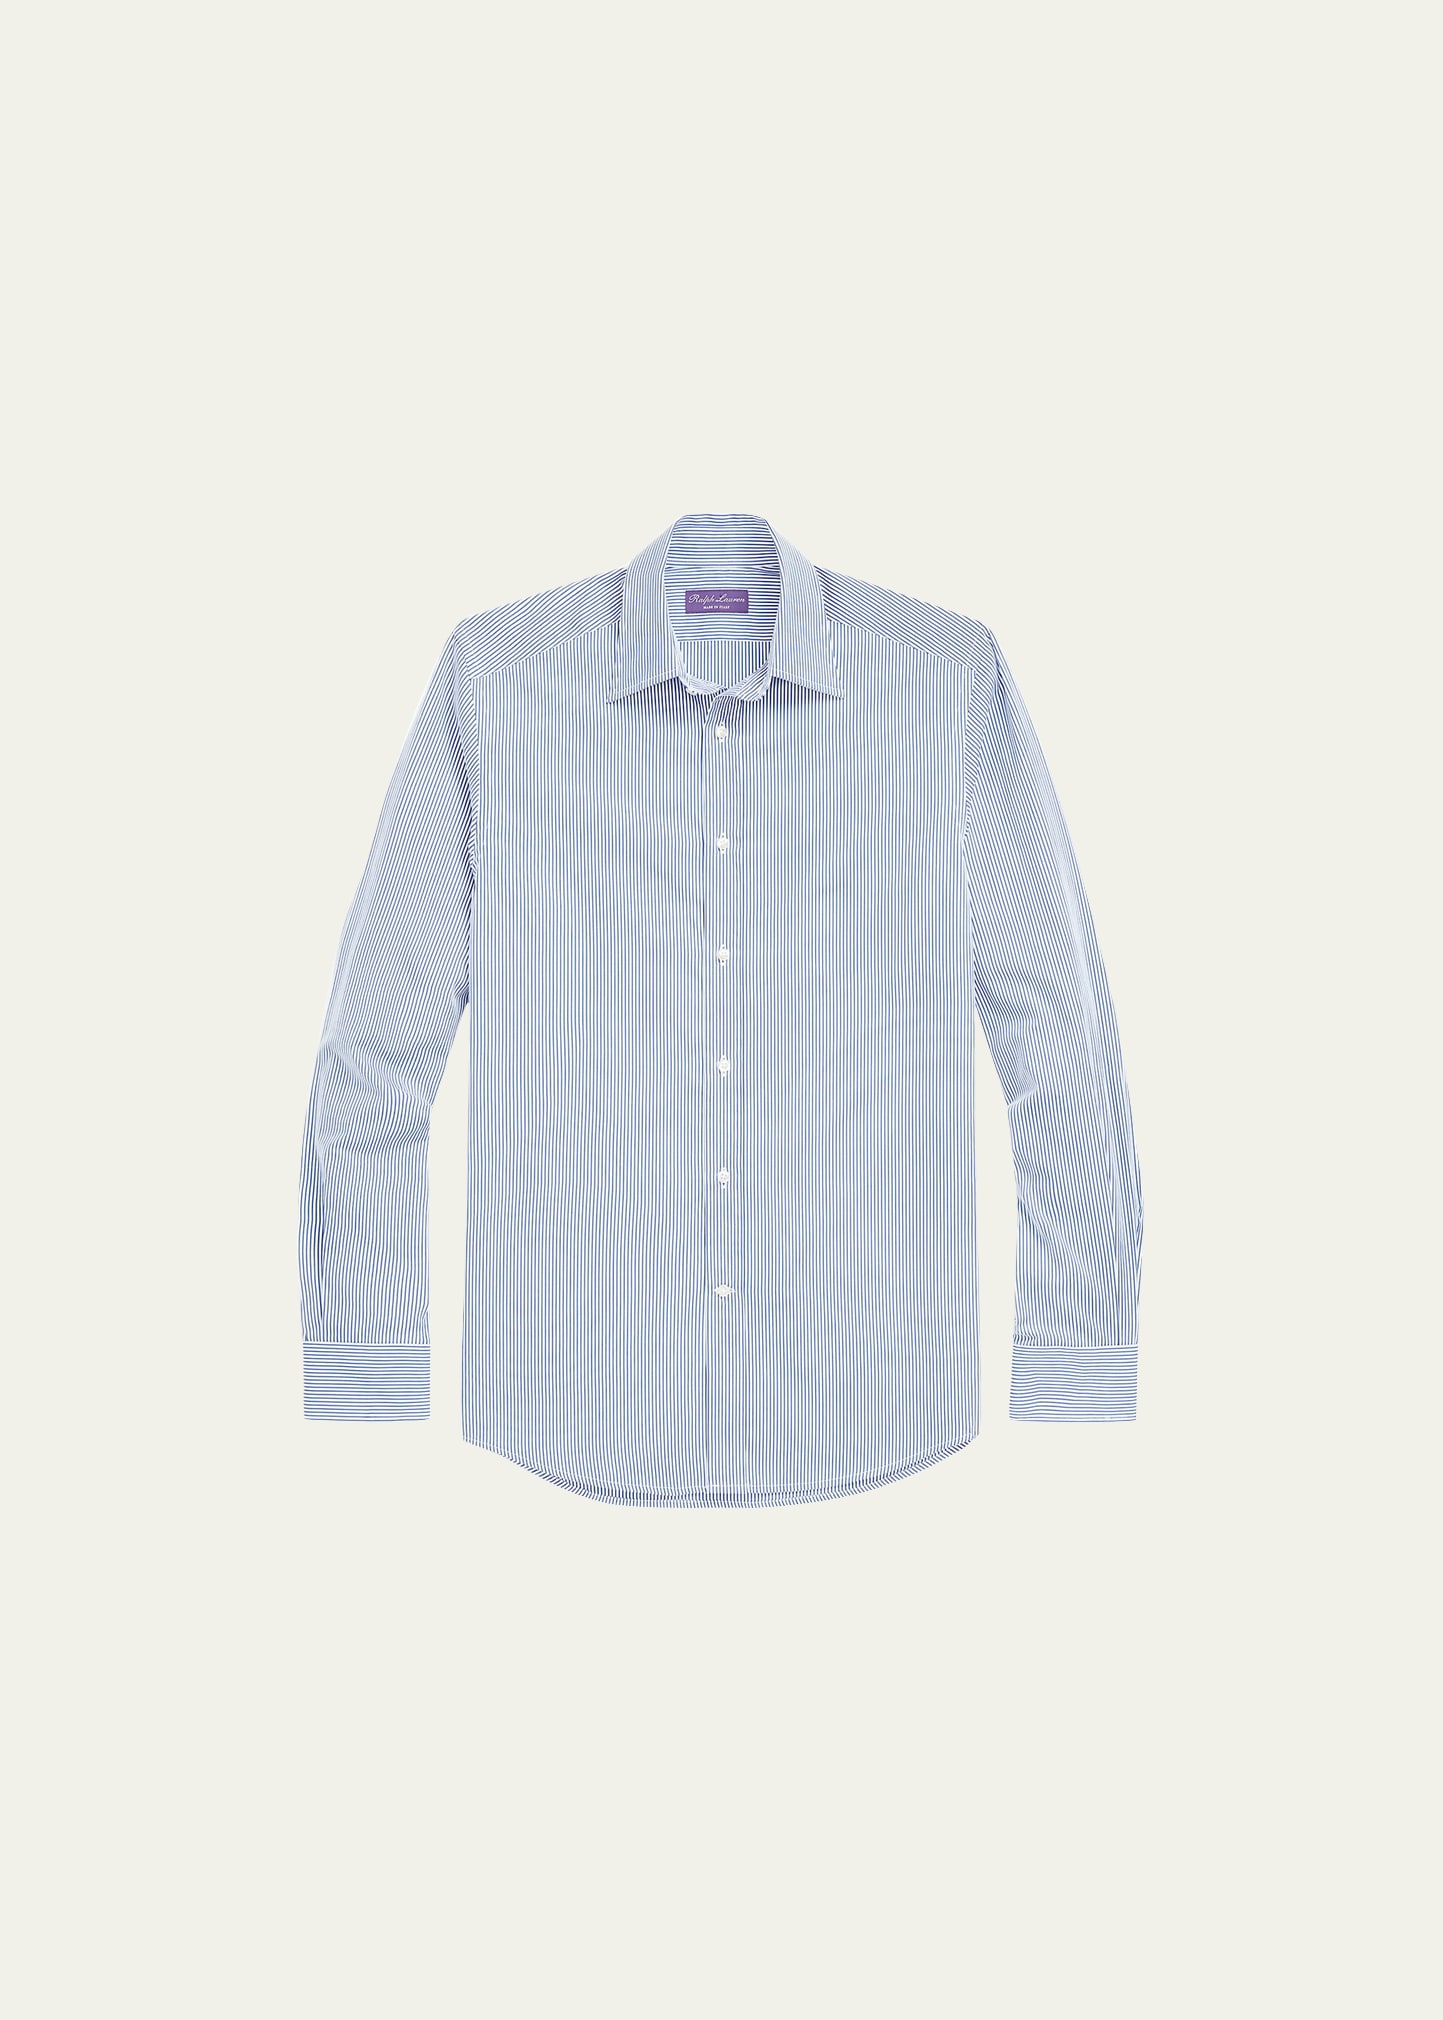 Ralph Lauren Purple Label Men's Sinclair Striped Sport Shirt In Blue White